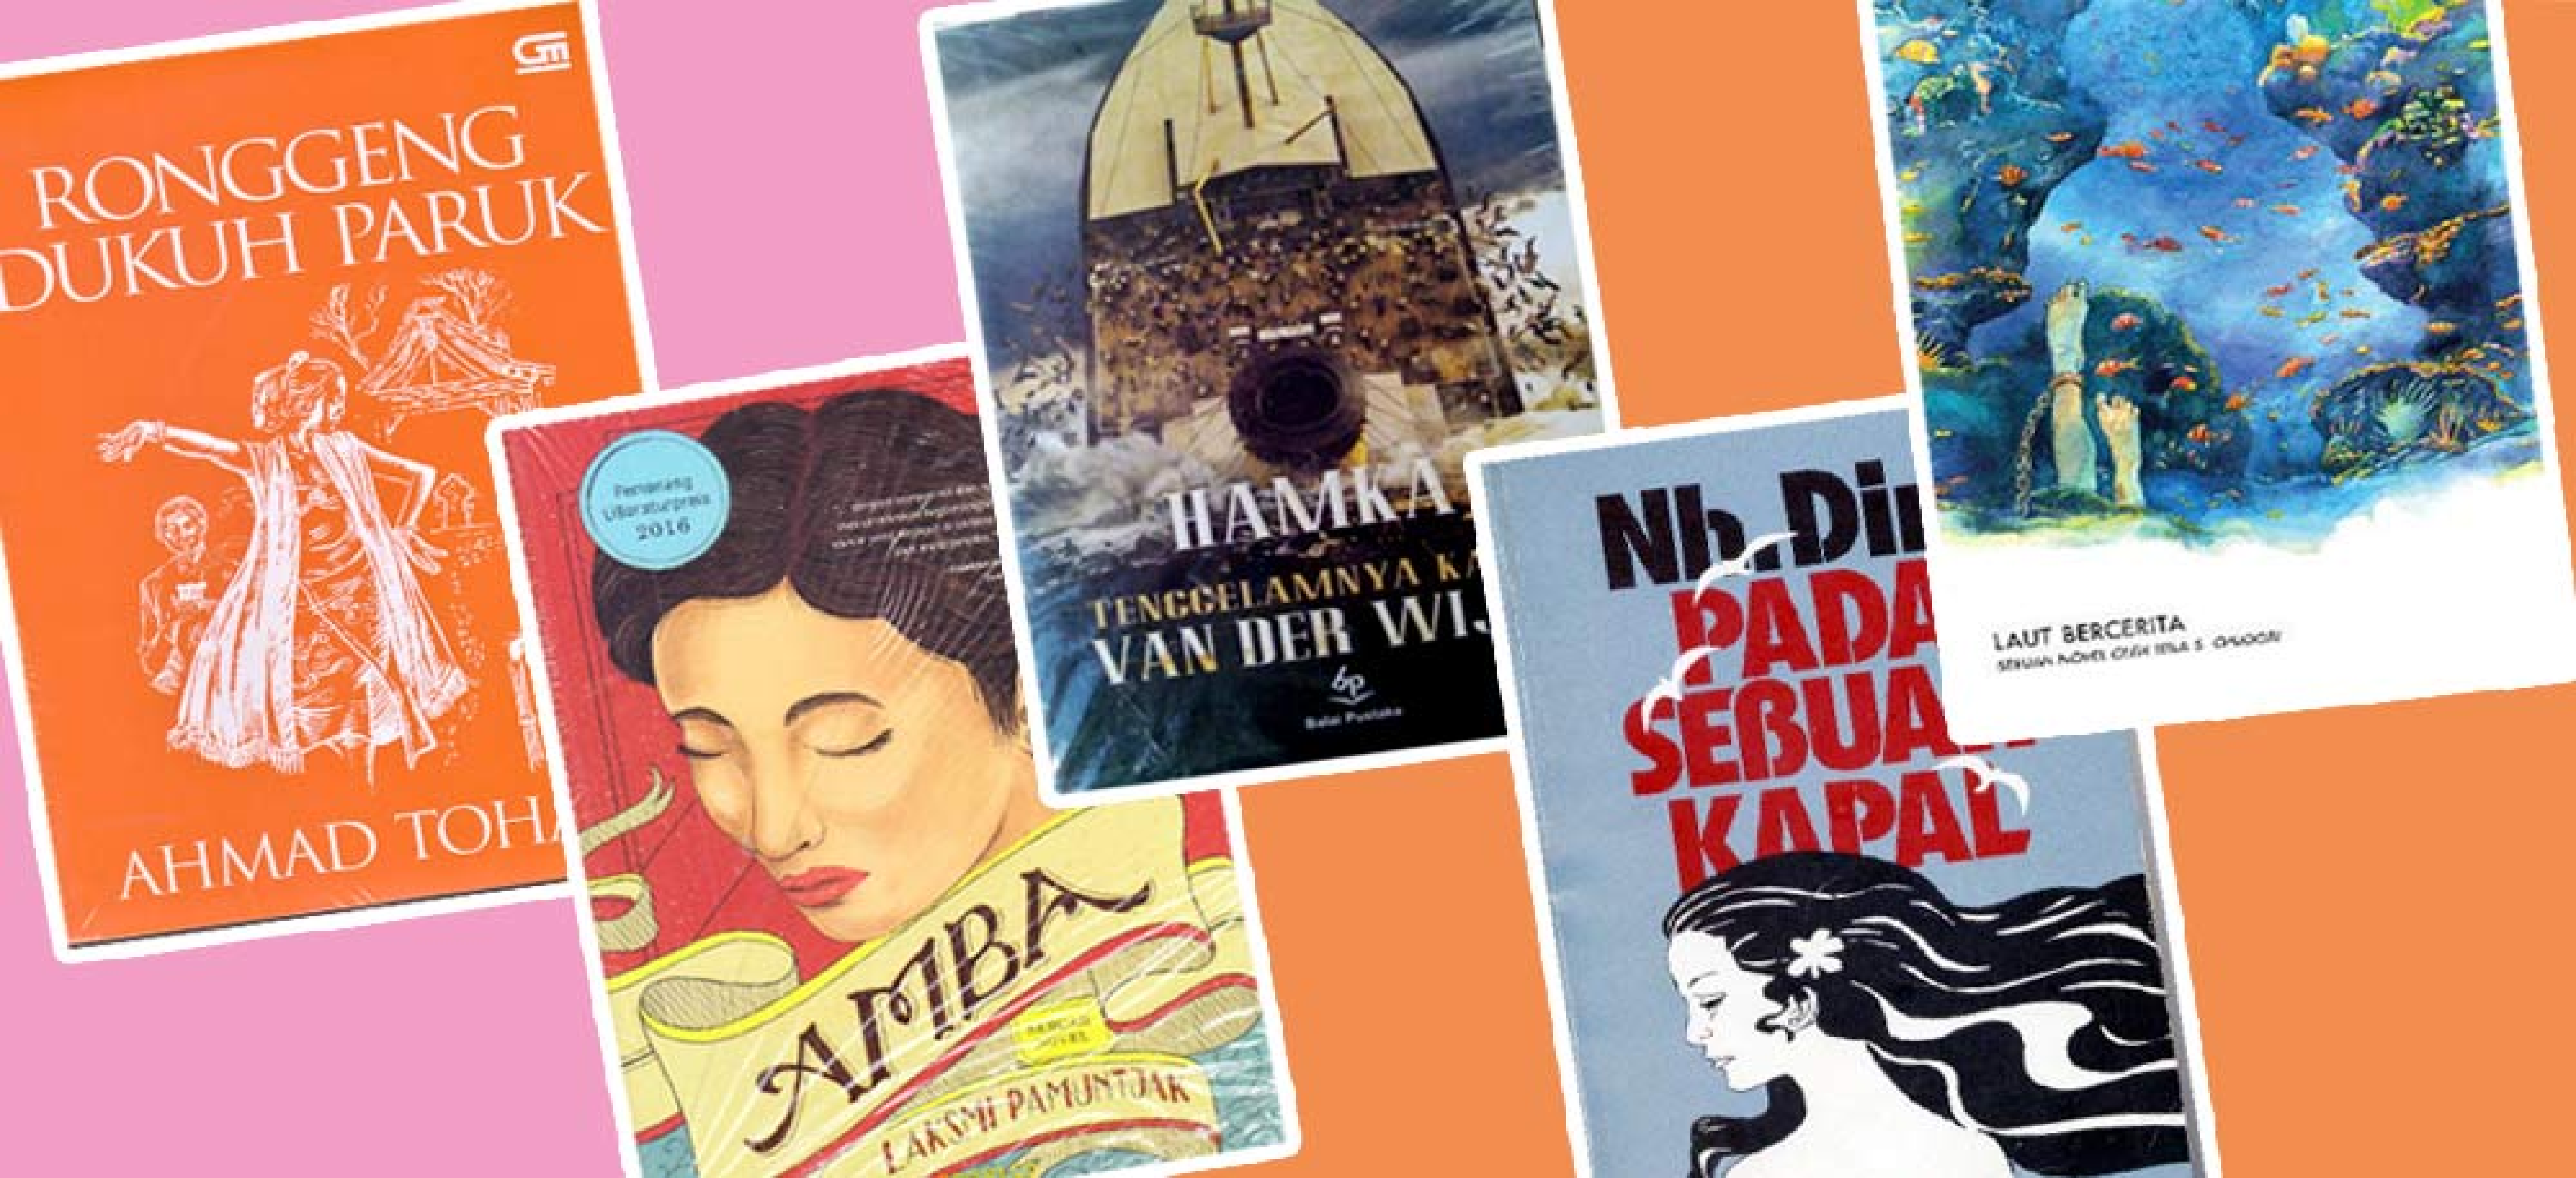 Bagaimana pendapatmu tentang perkembangan novel di Indonesia?  Diskusi